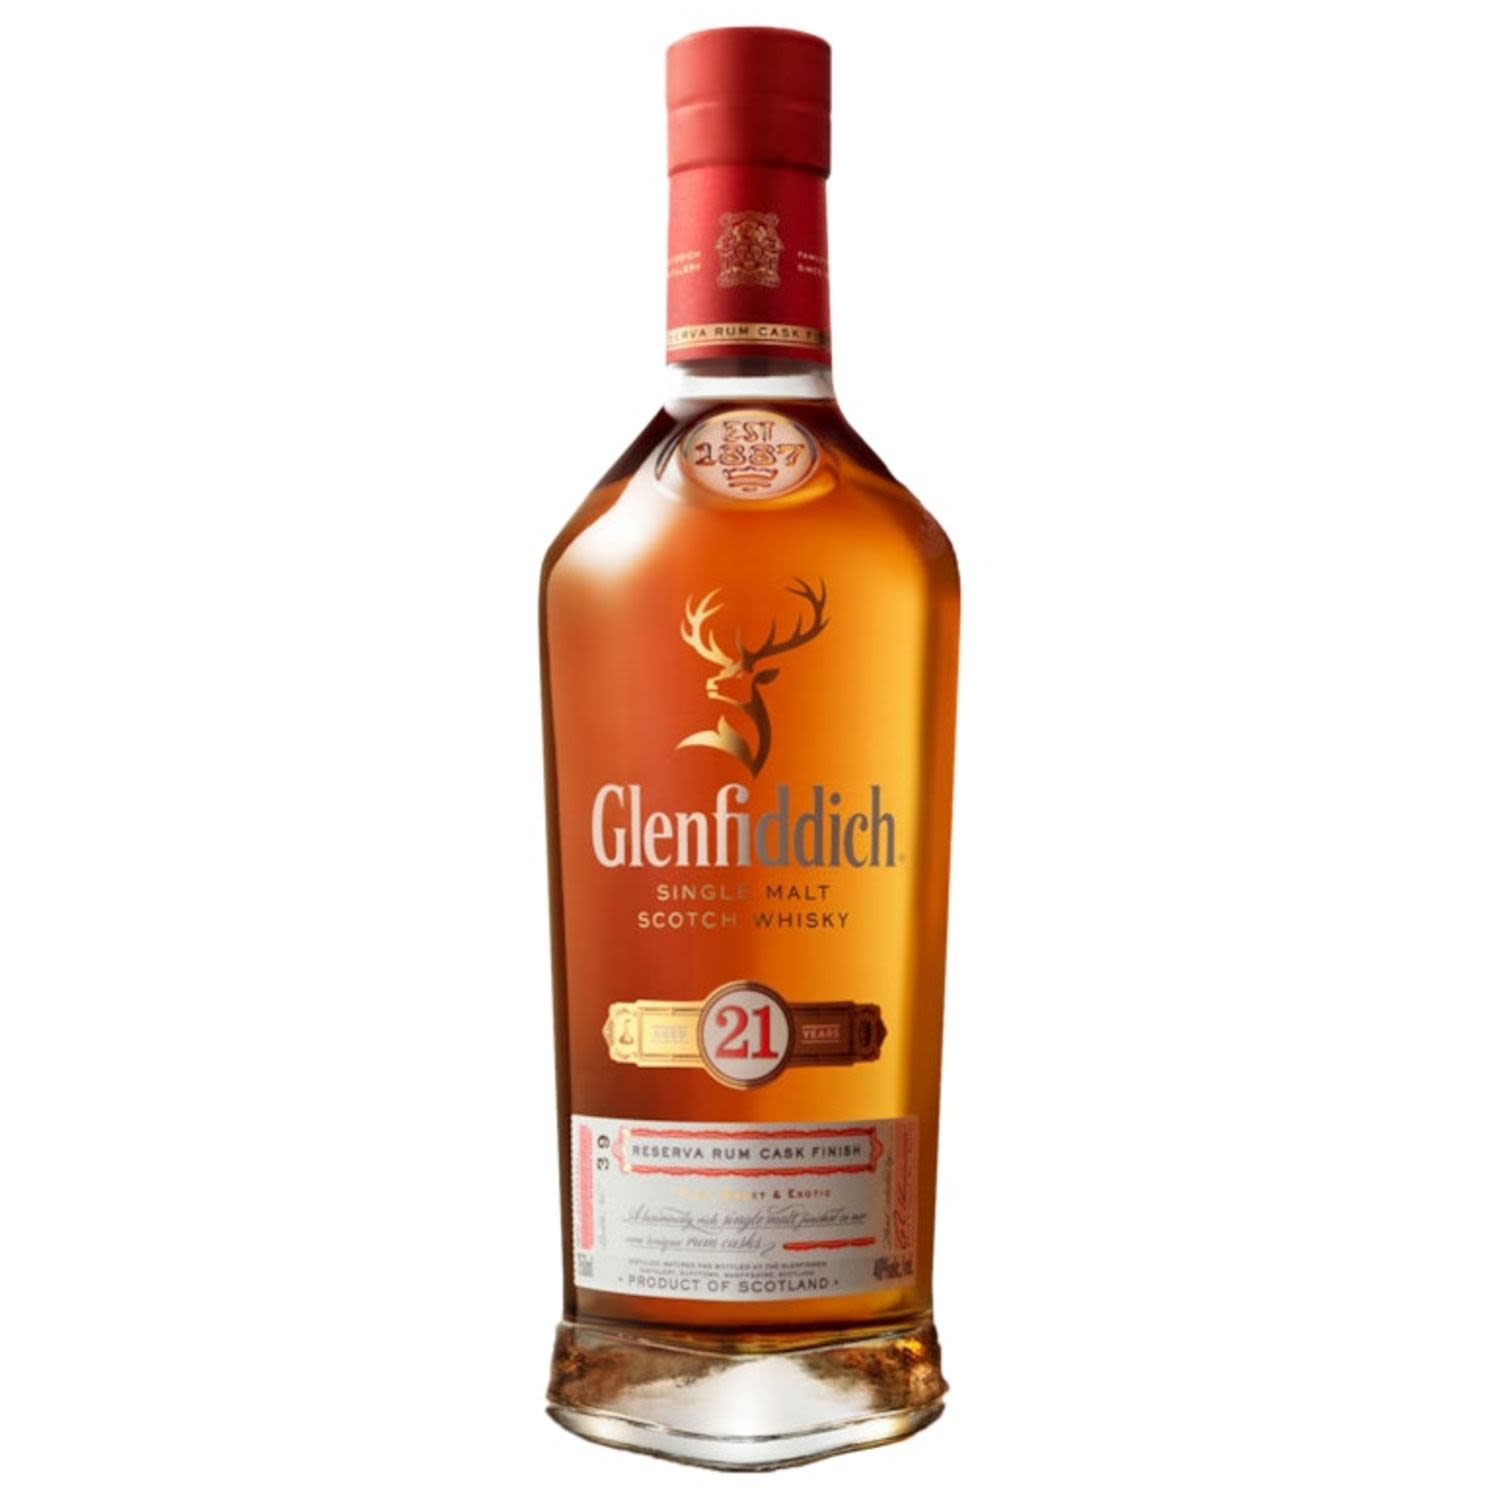 Glenfiddich 21 Year Old Scotch Whisky 700mL Bottle